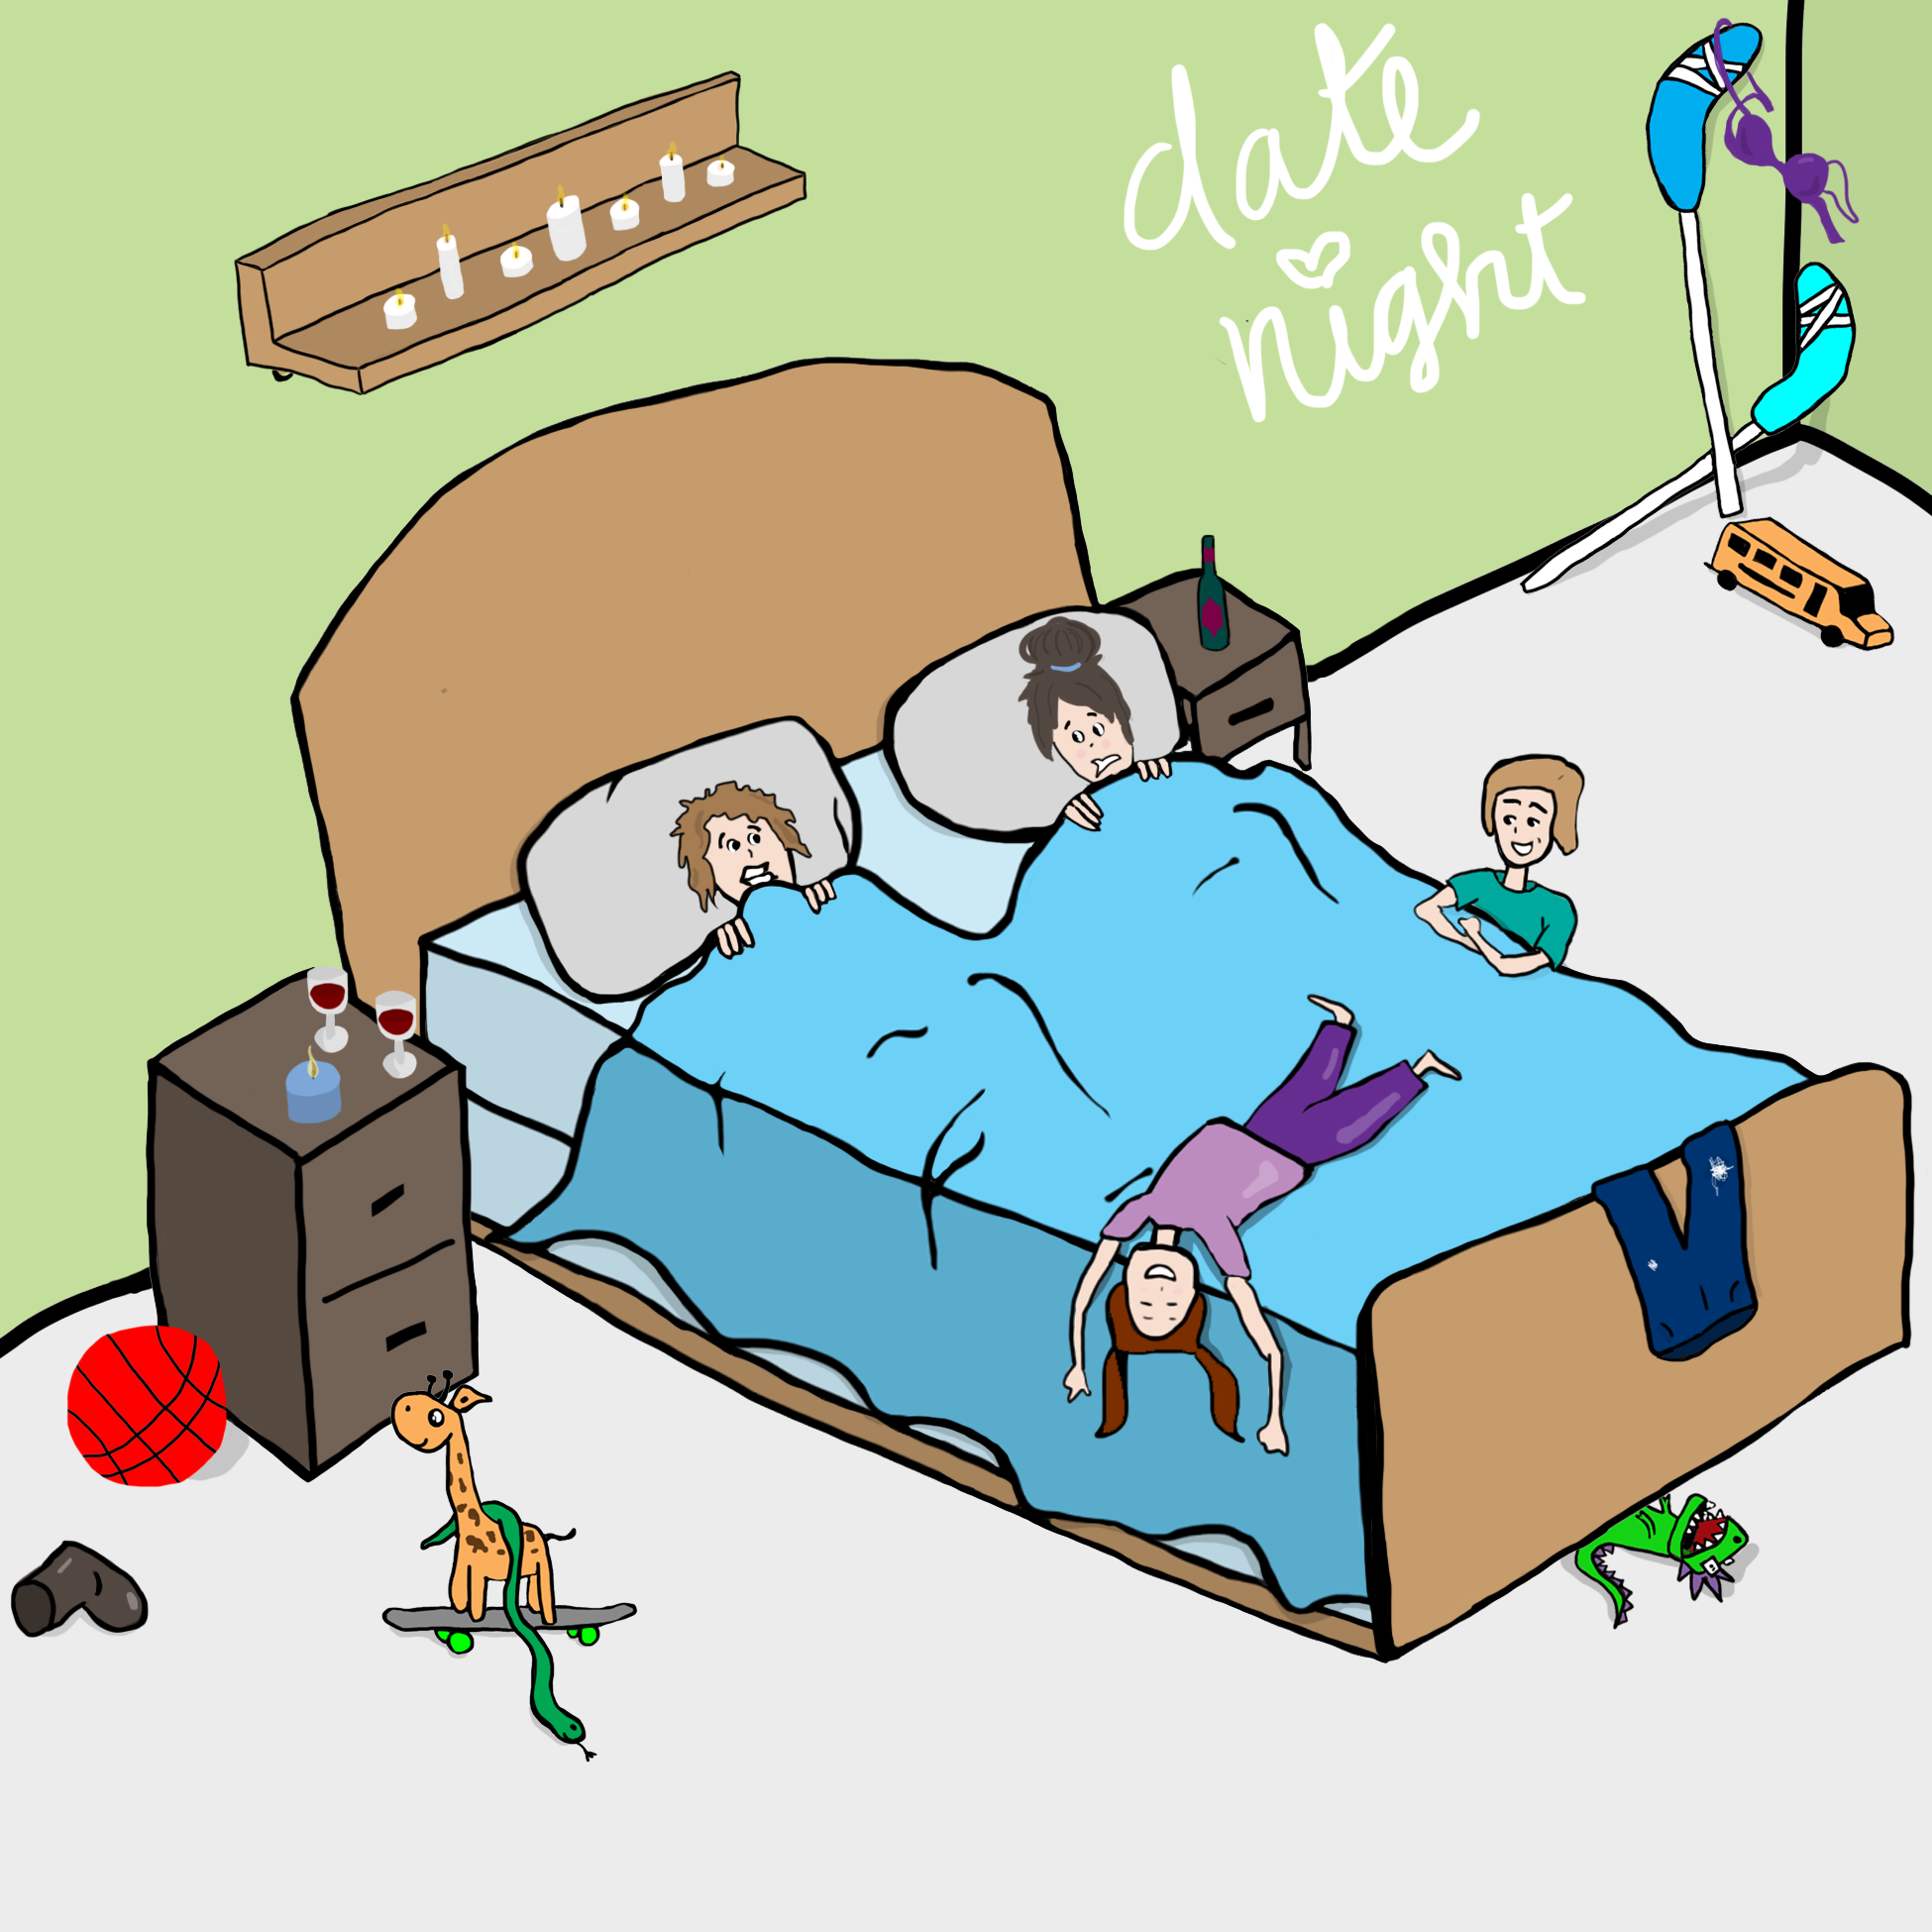 TLE - "Date Night"